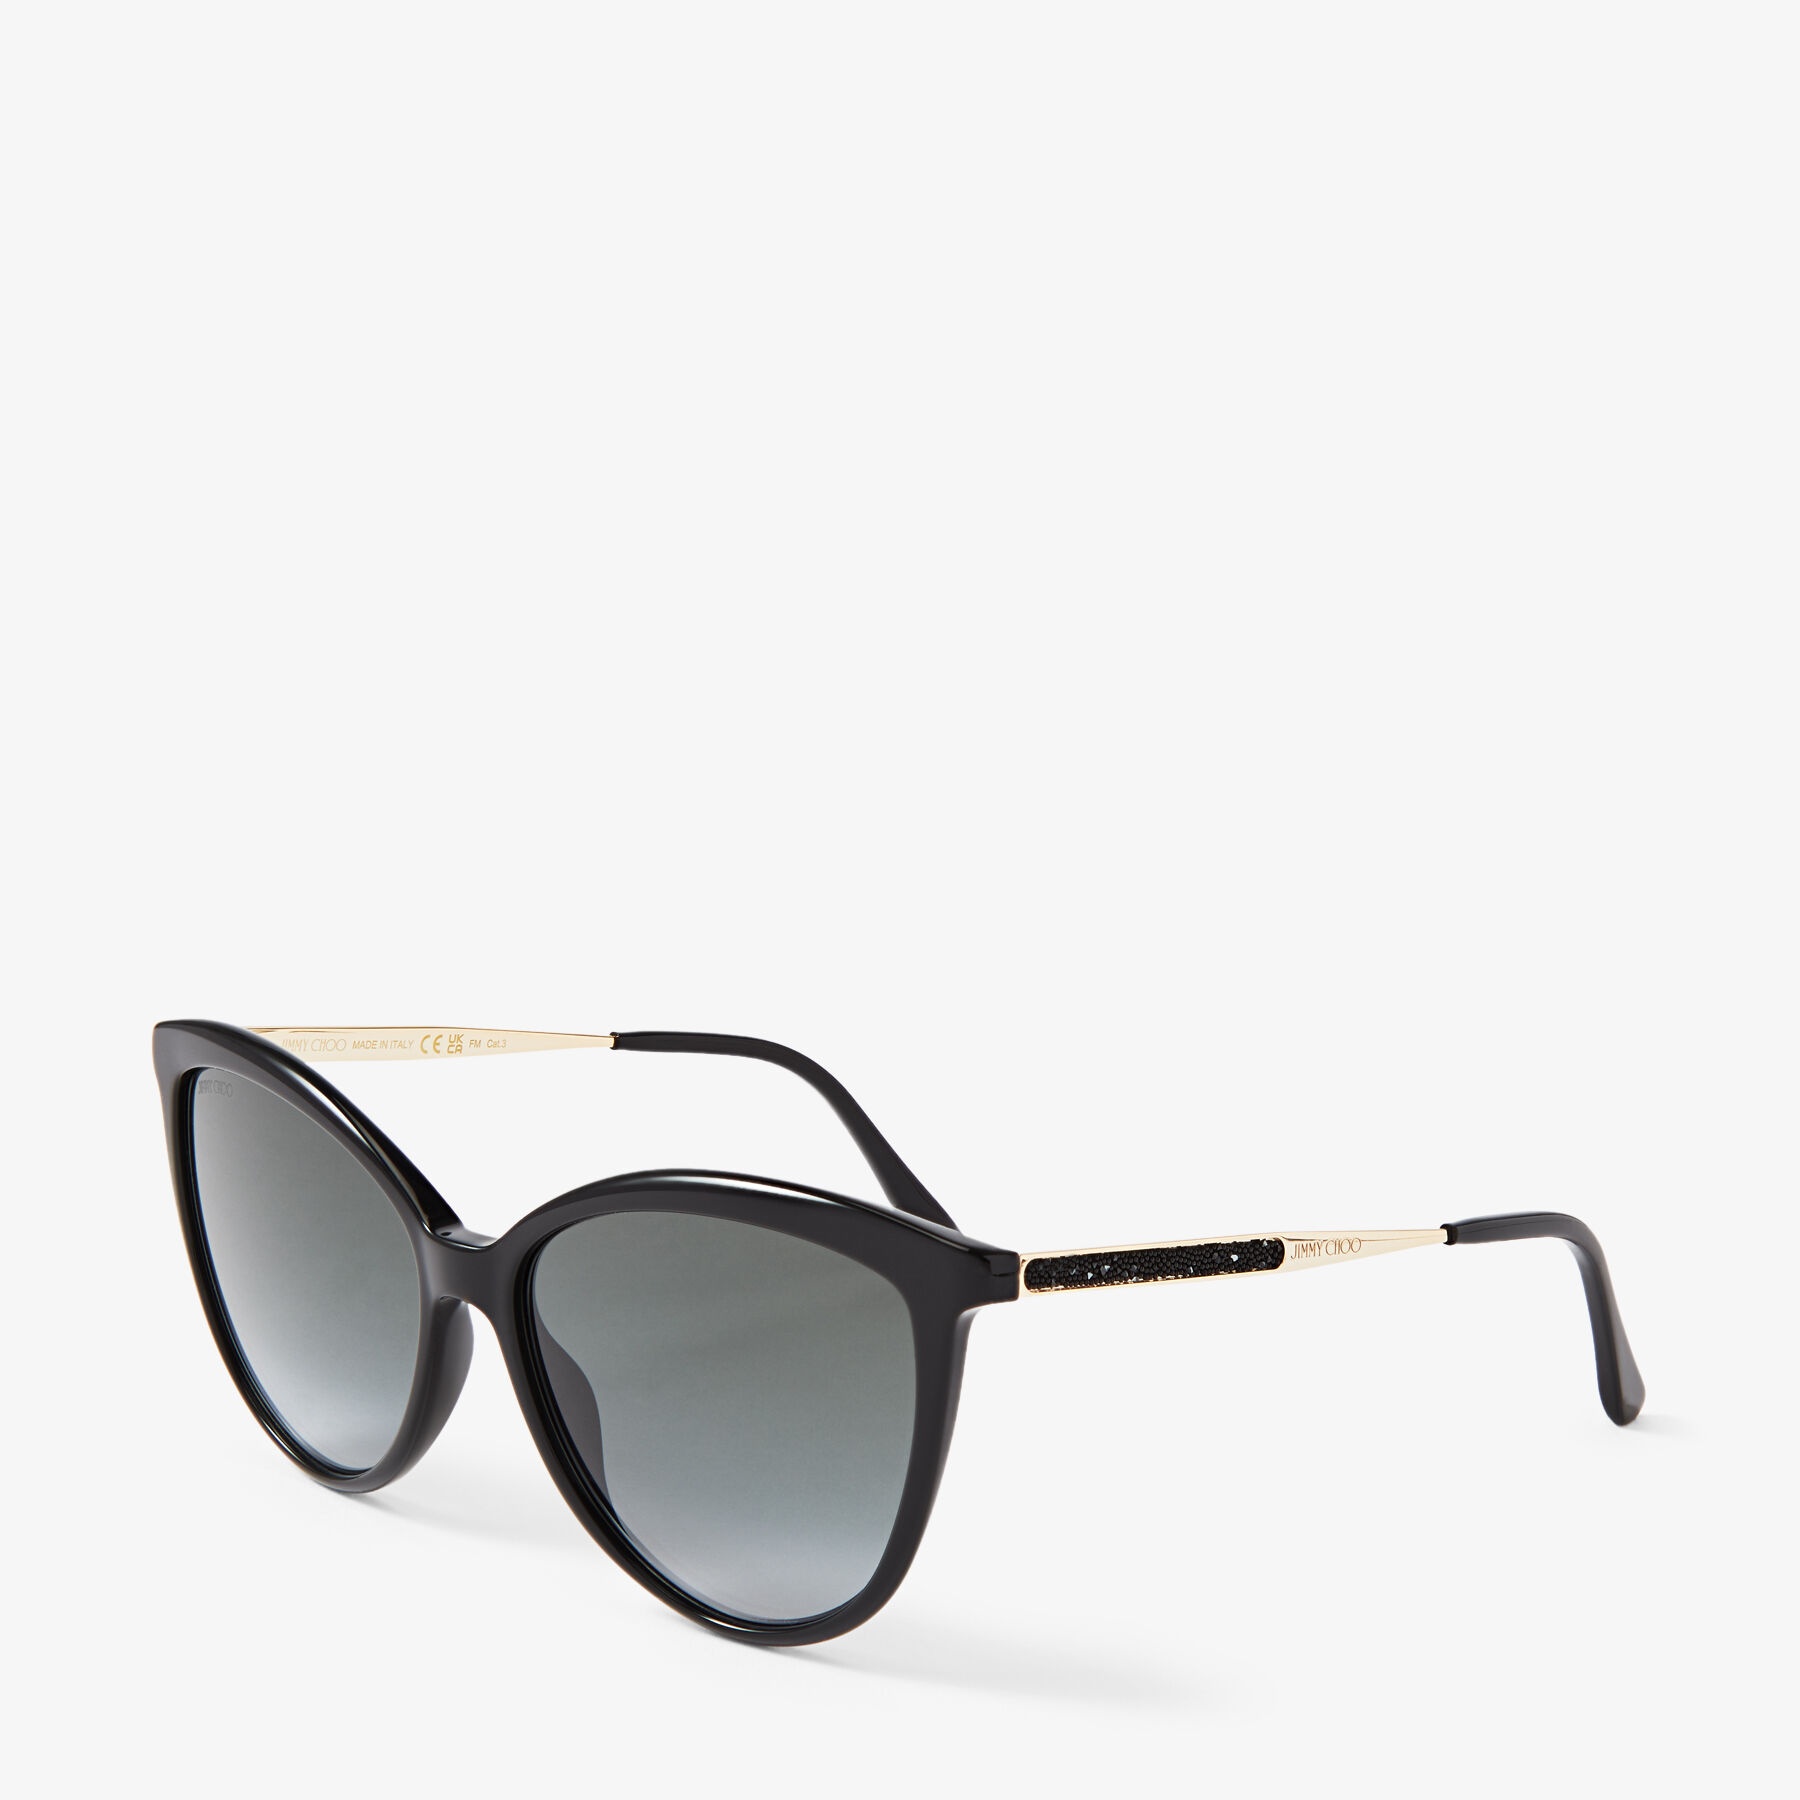 Belinda
Black Cat Eye Sunglasses with Swarovski Crystals - 3